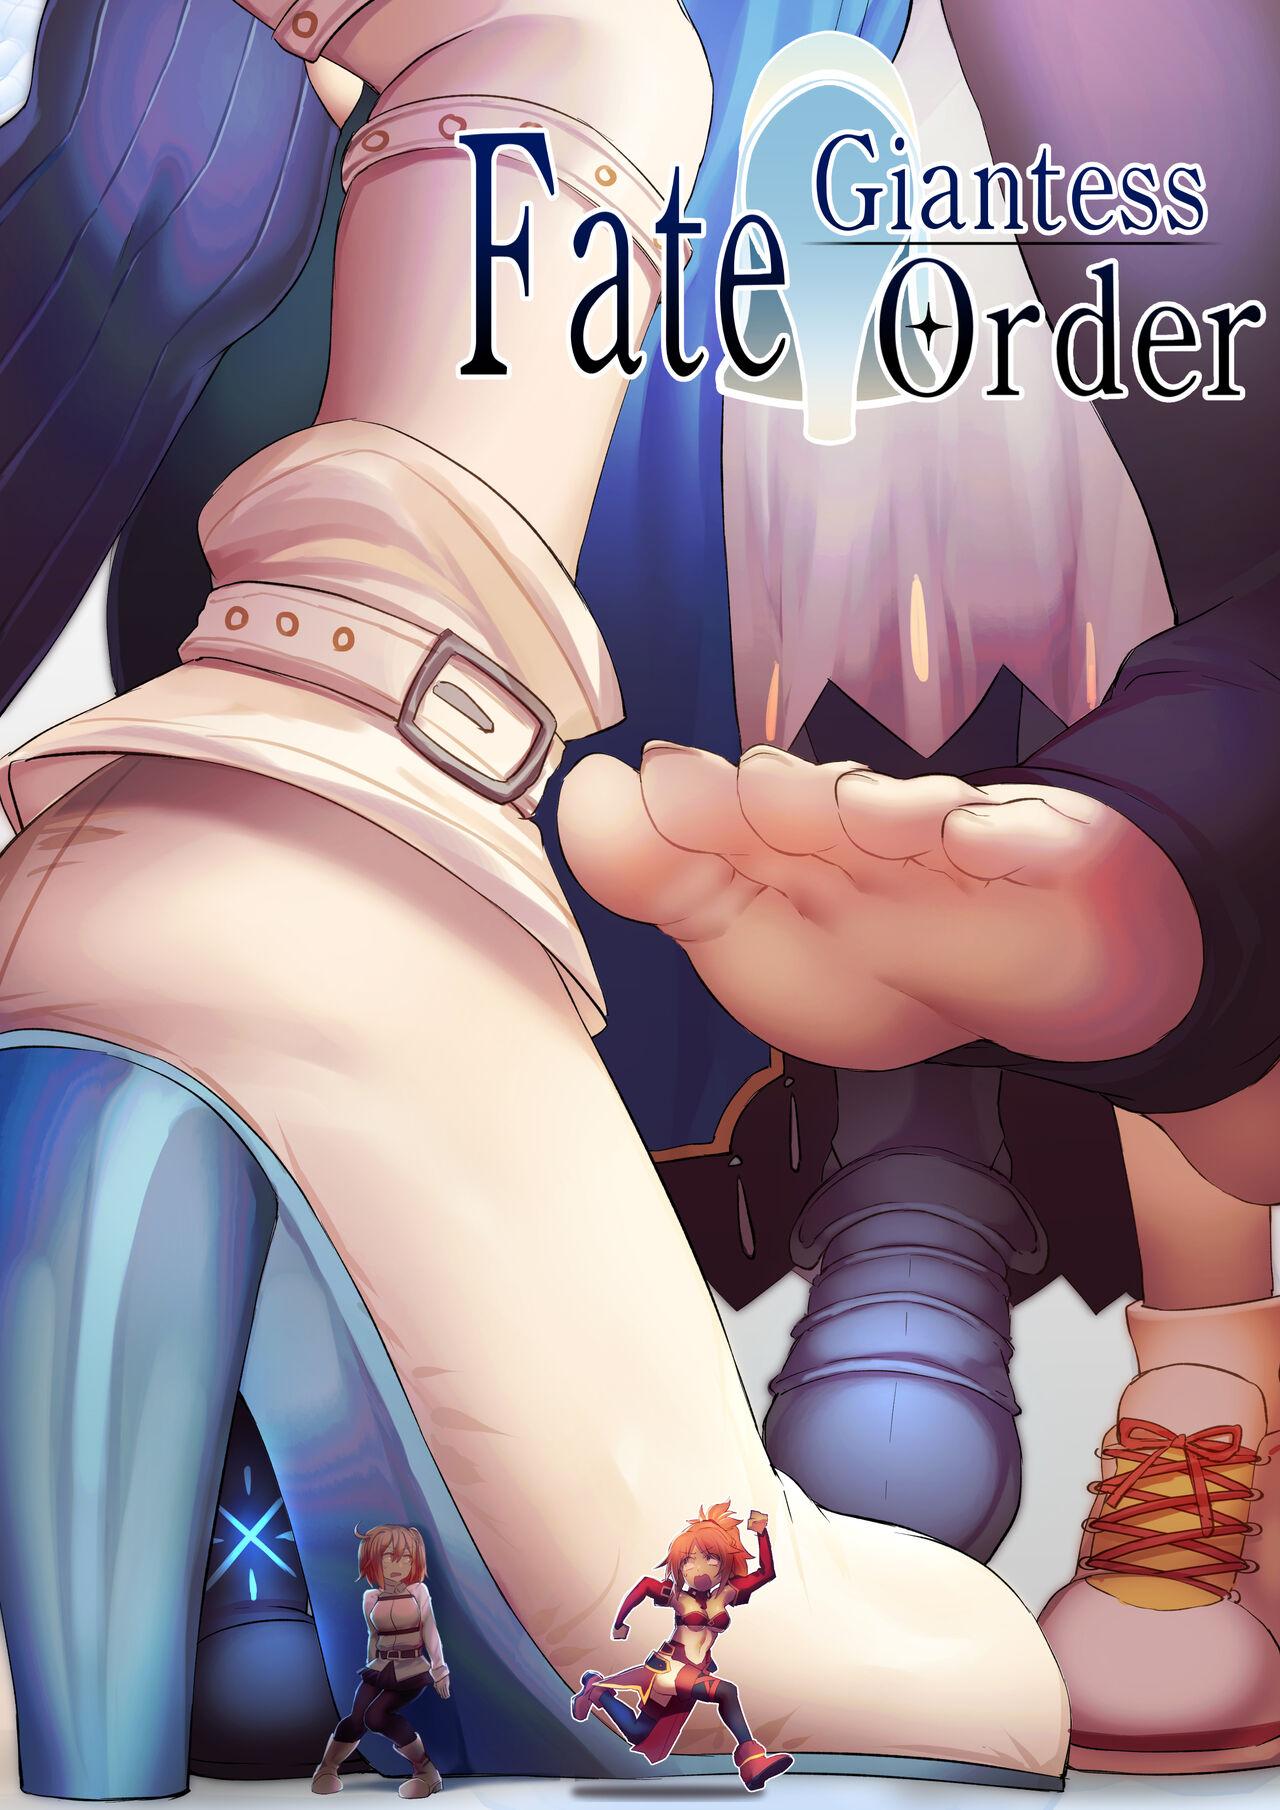 Fate/Giantess Order 0